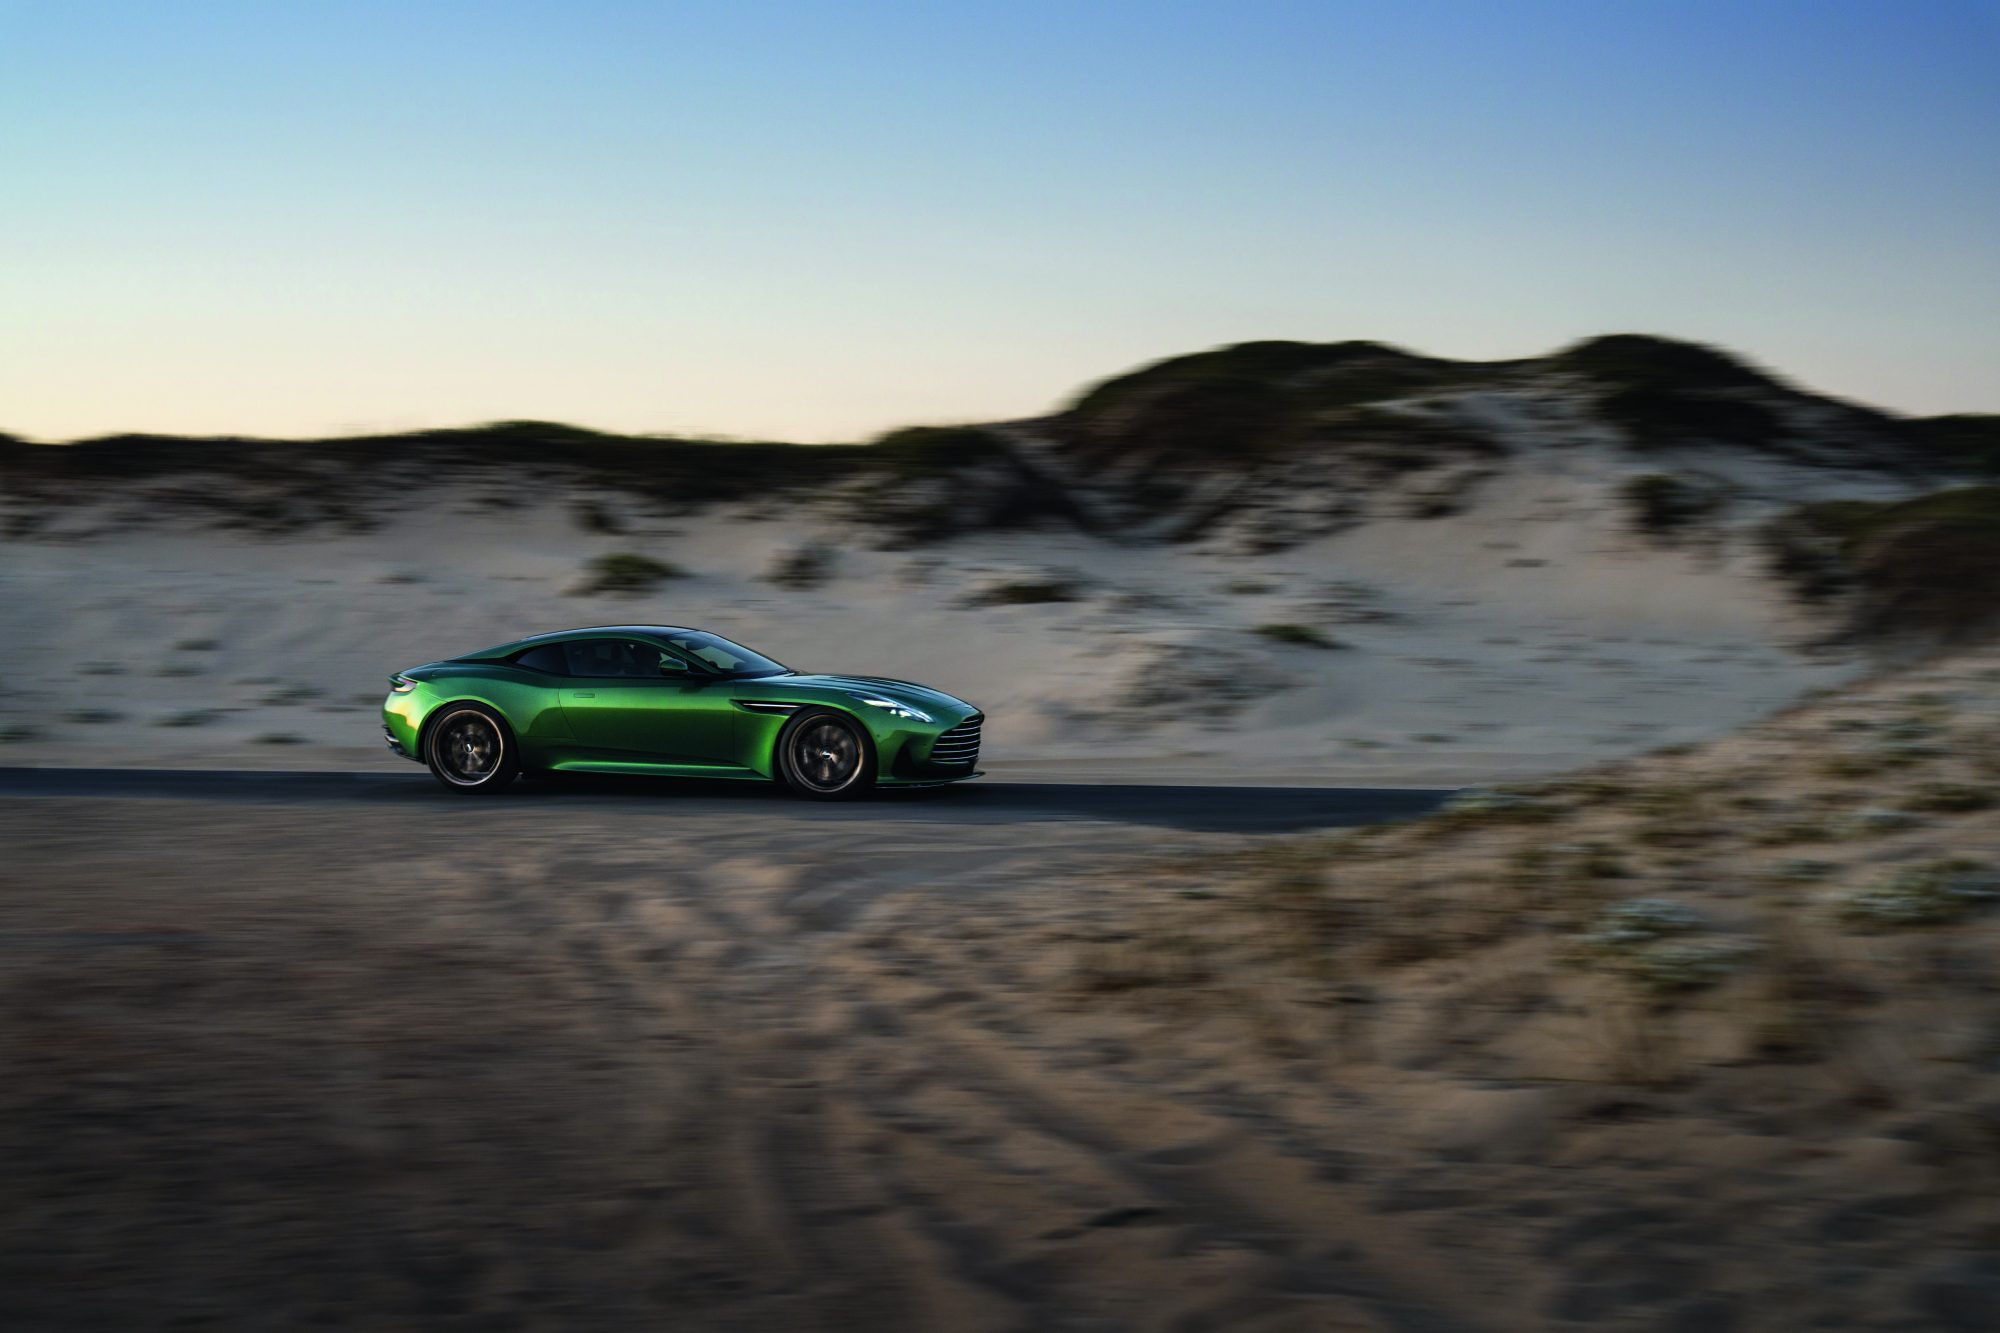 Introducing the Aston Martin DB12: The world’s first Super Tourer